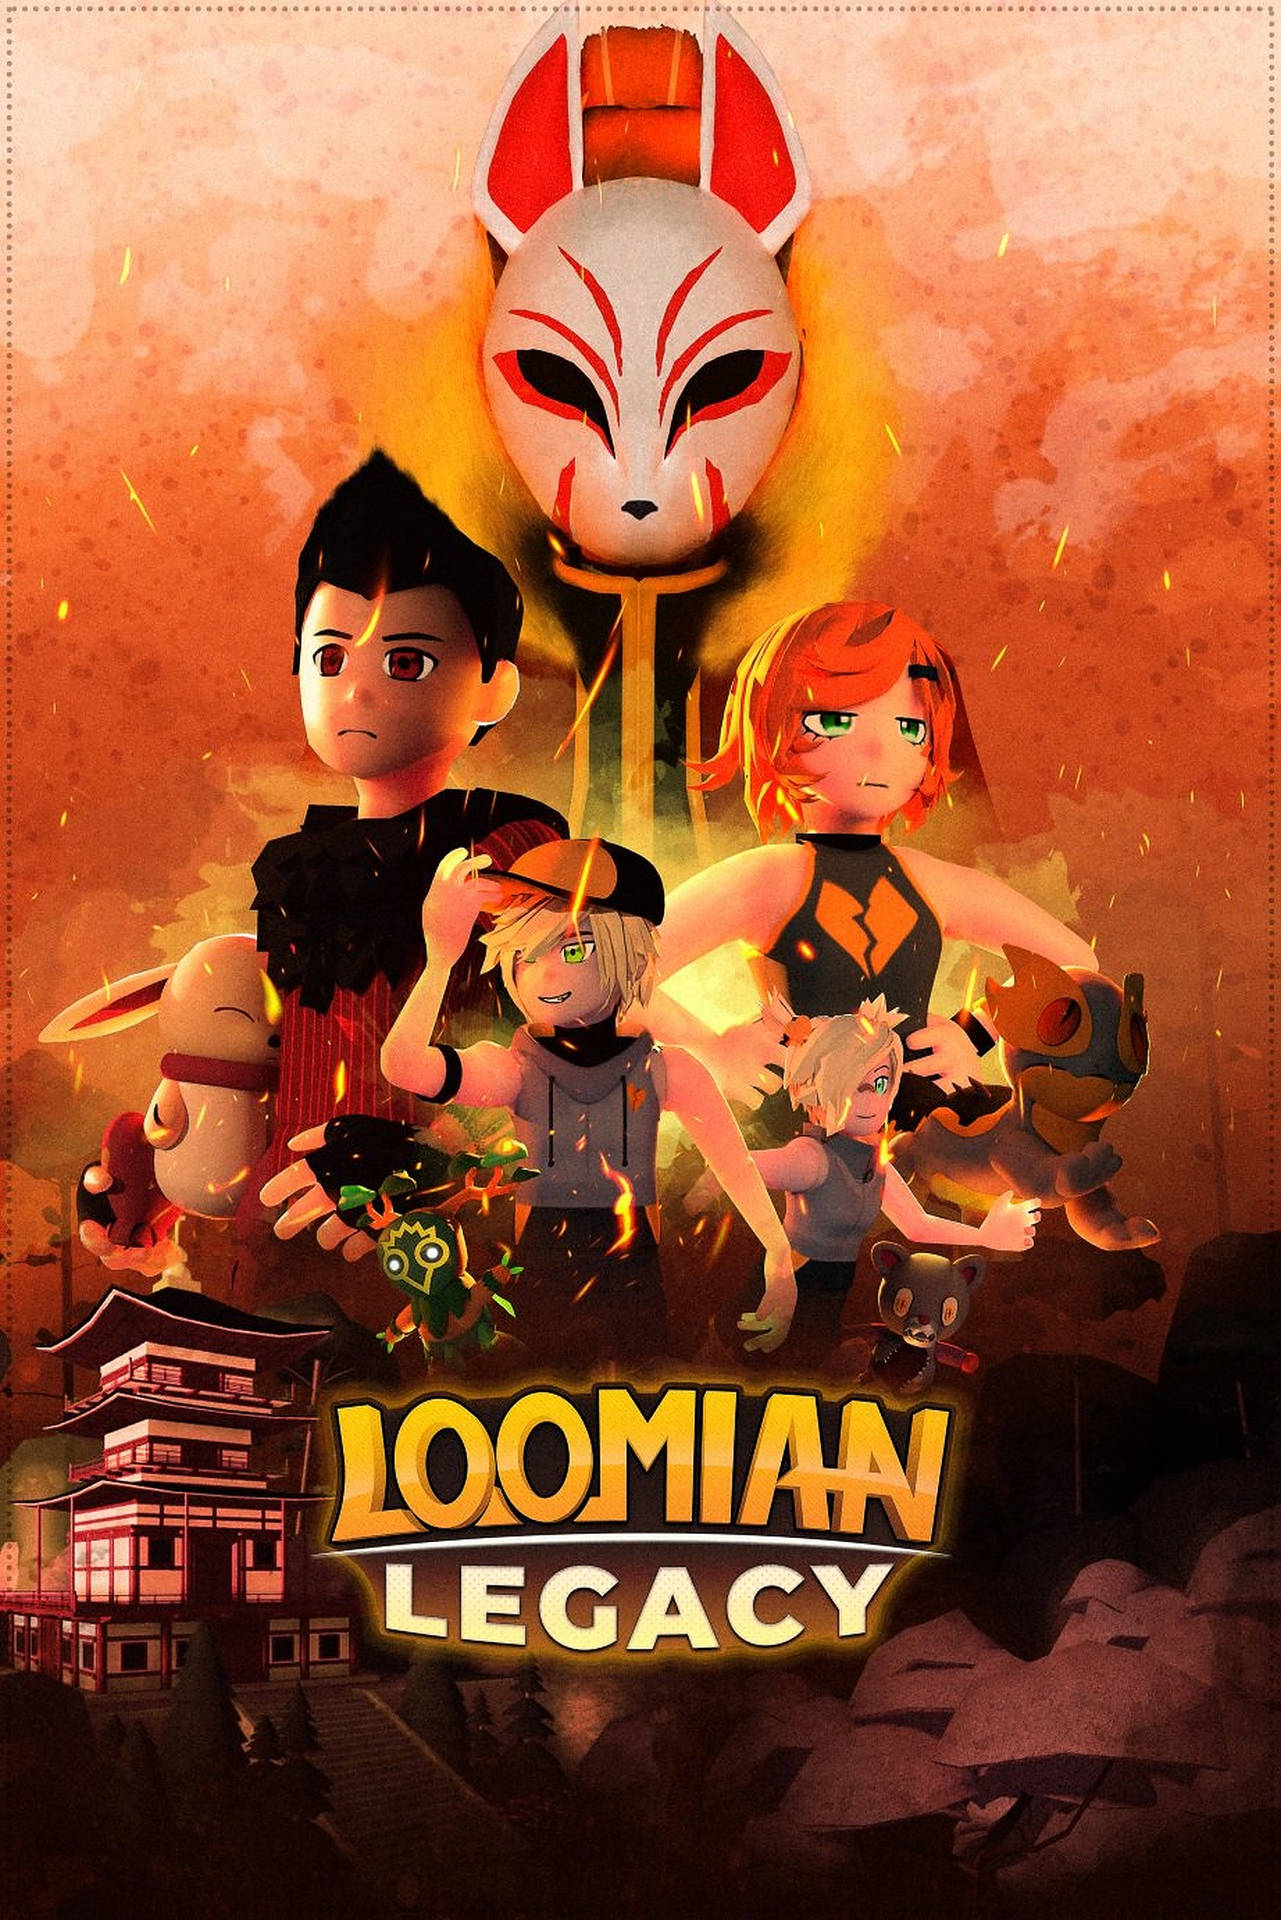 Loomian Legacy Flaming Poster Wallpaper